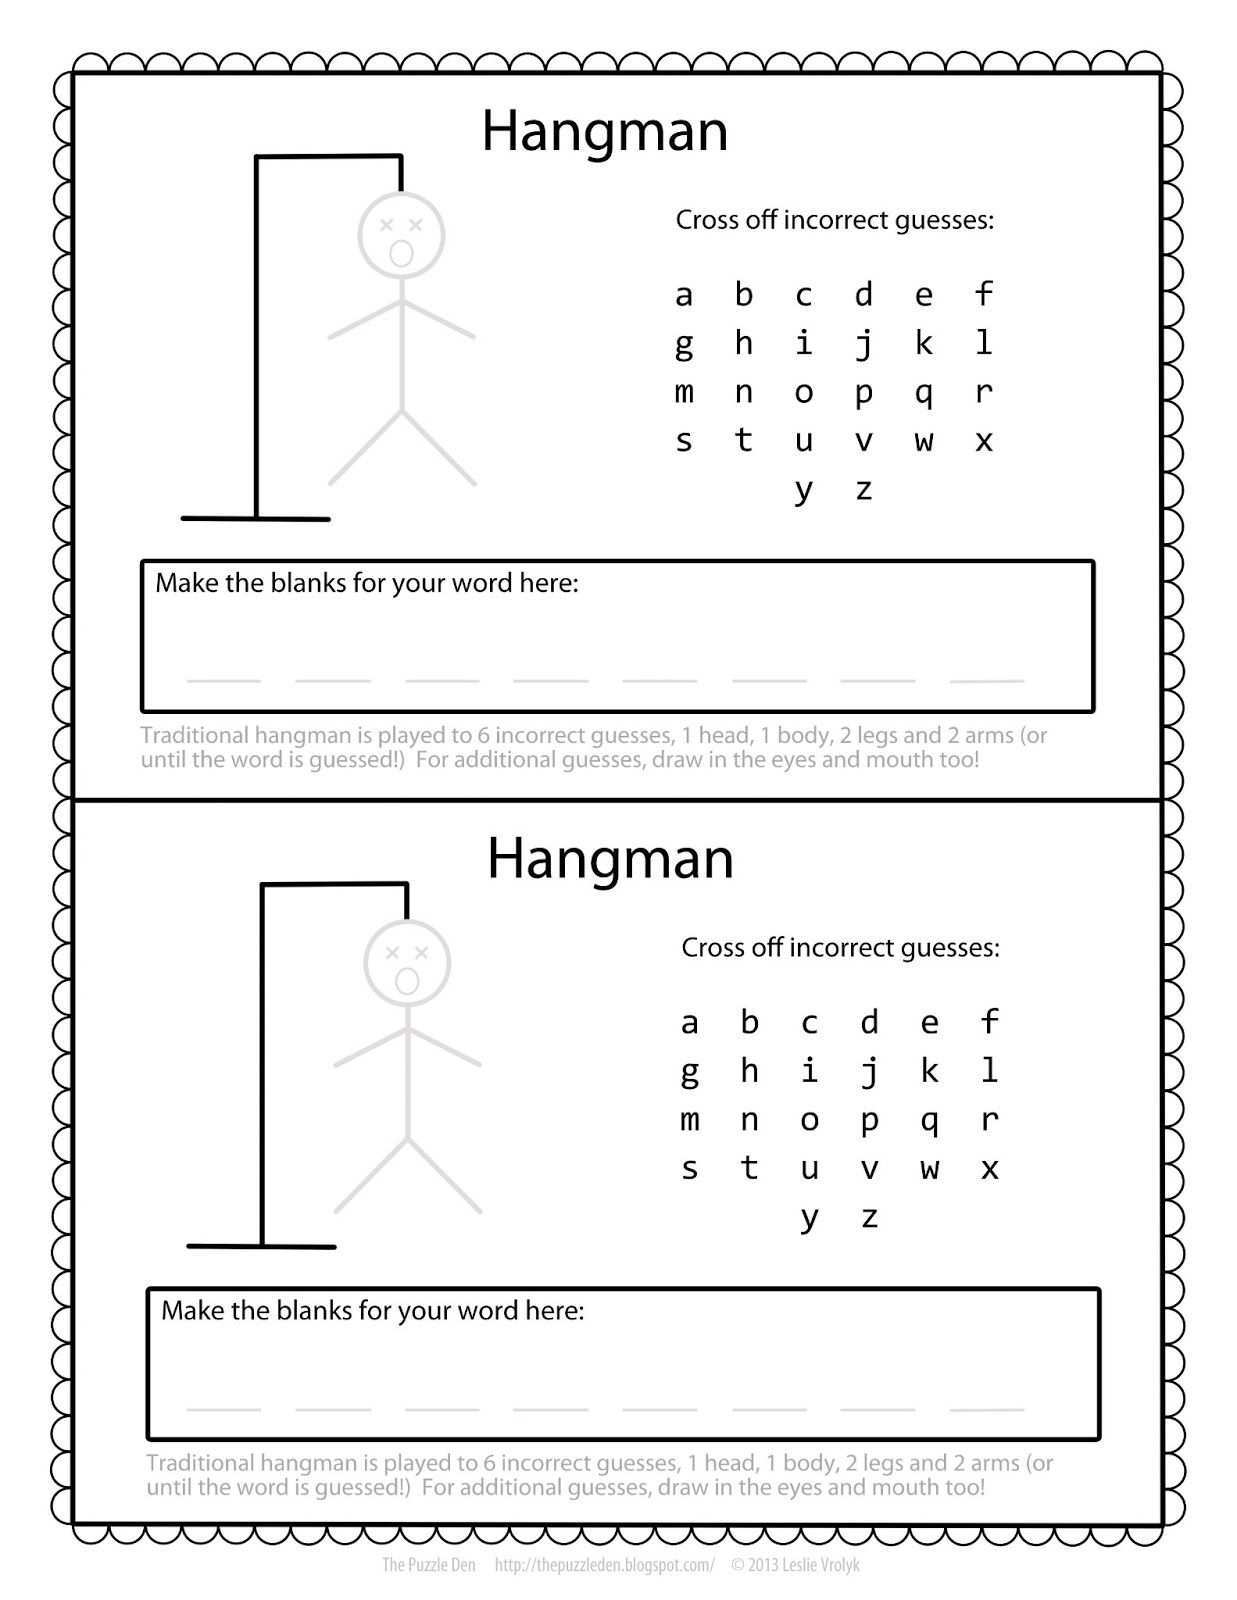 Free Hangman Template Printable Games For Kids Hangman Words Paper Games